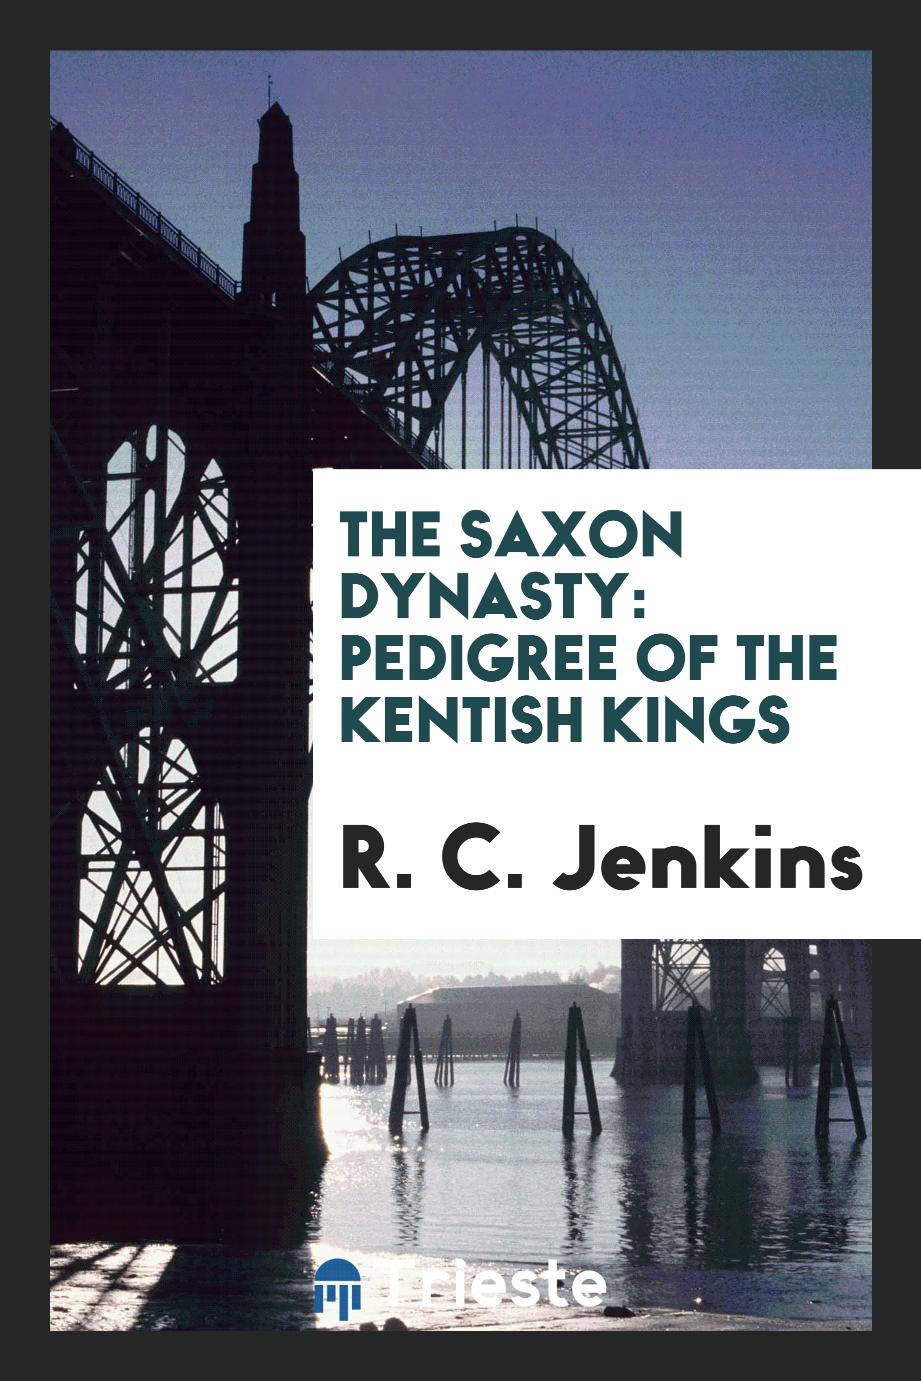 The Saxon Dynasty: Pedigree of the Kentish Kings